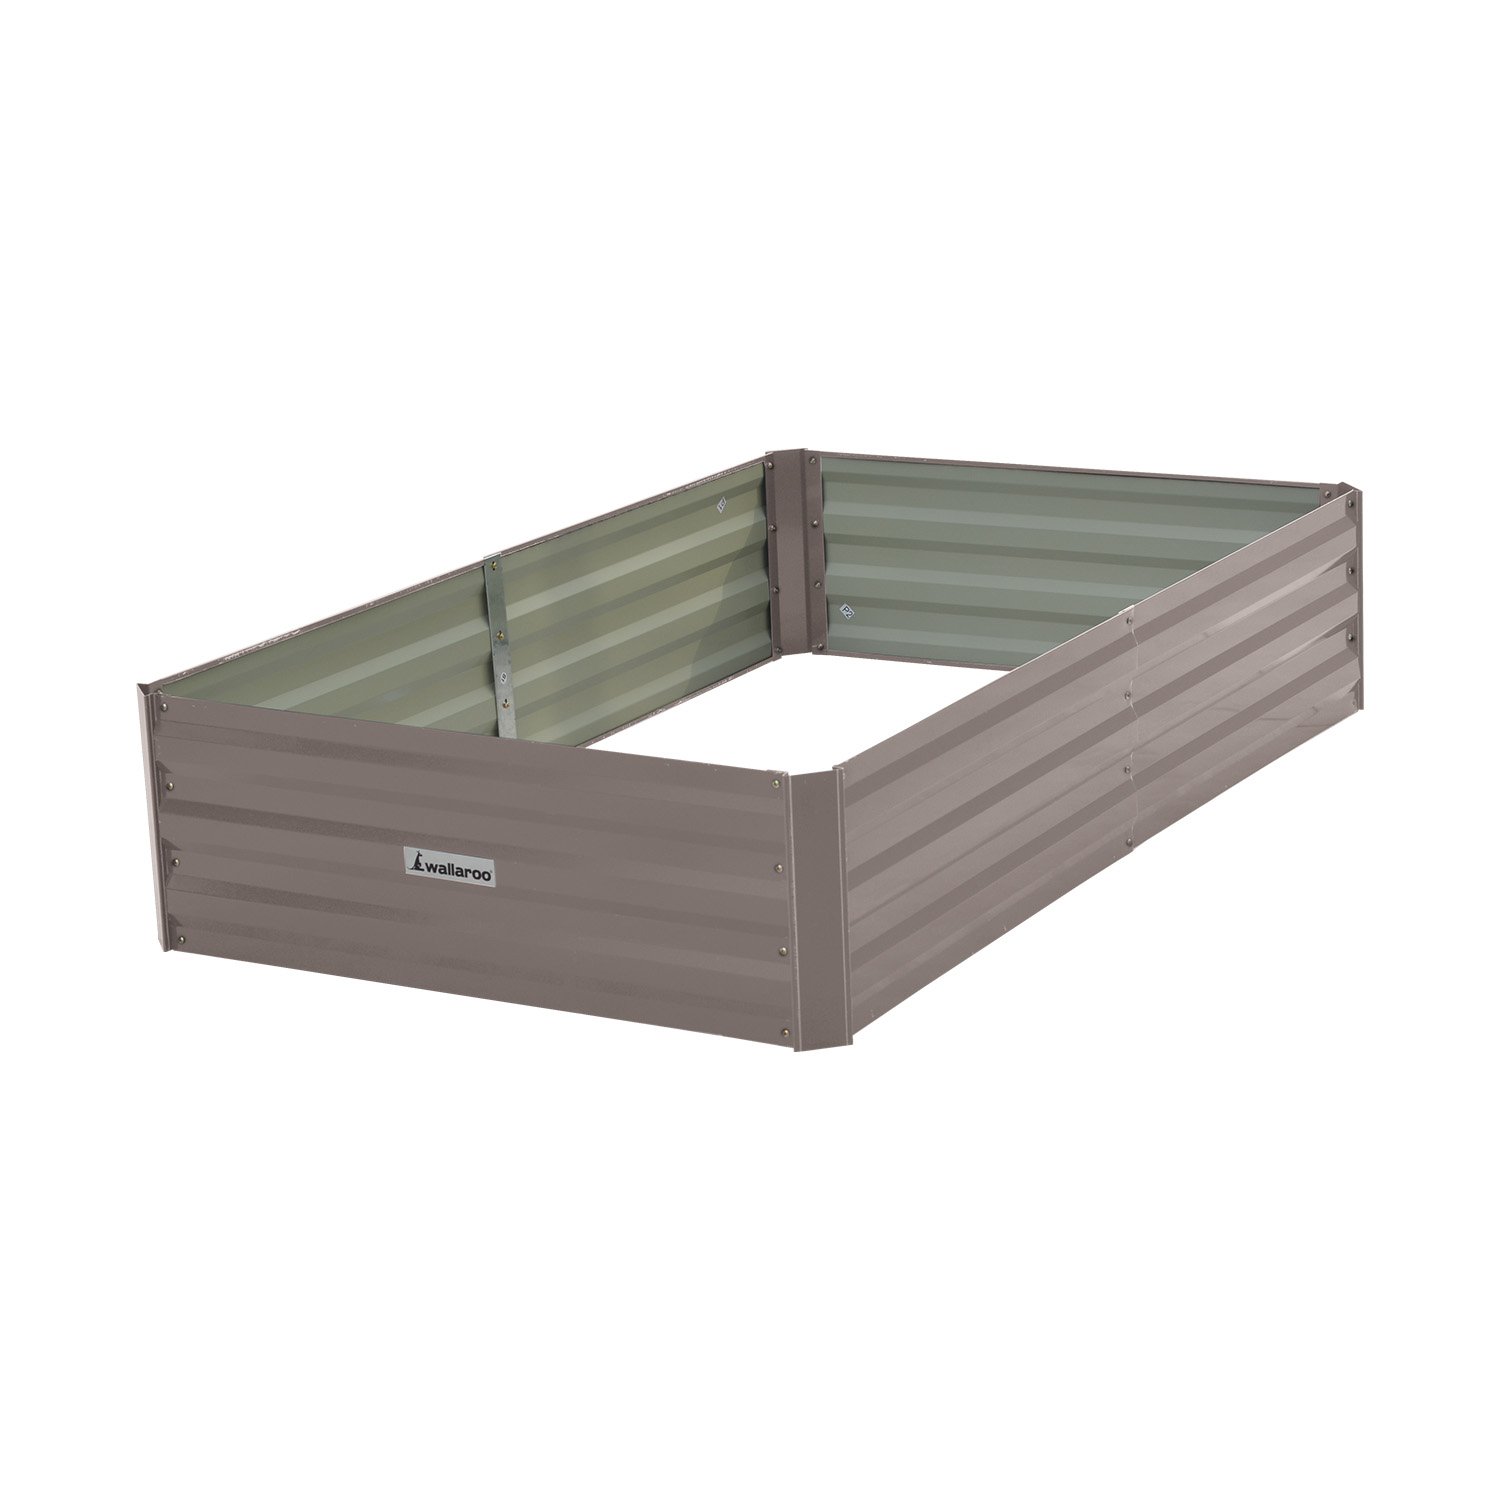 Wallaroo Garden Bed 150 x 90 x 30cm Galvanized Steel - Grey 2